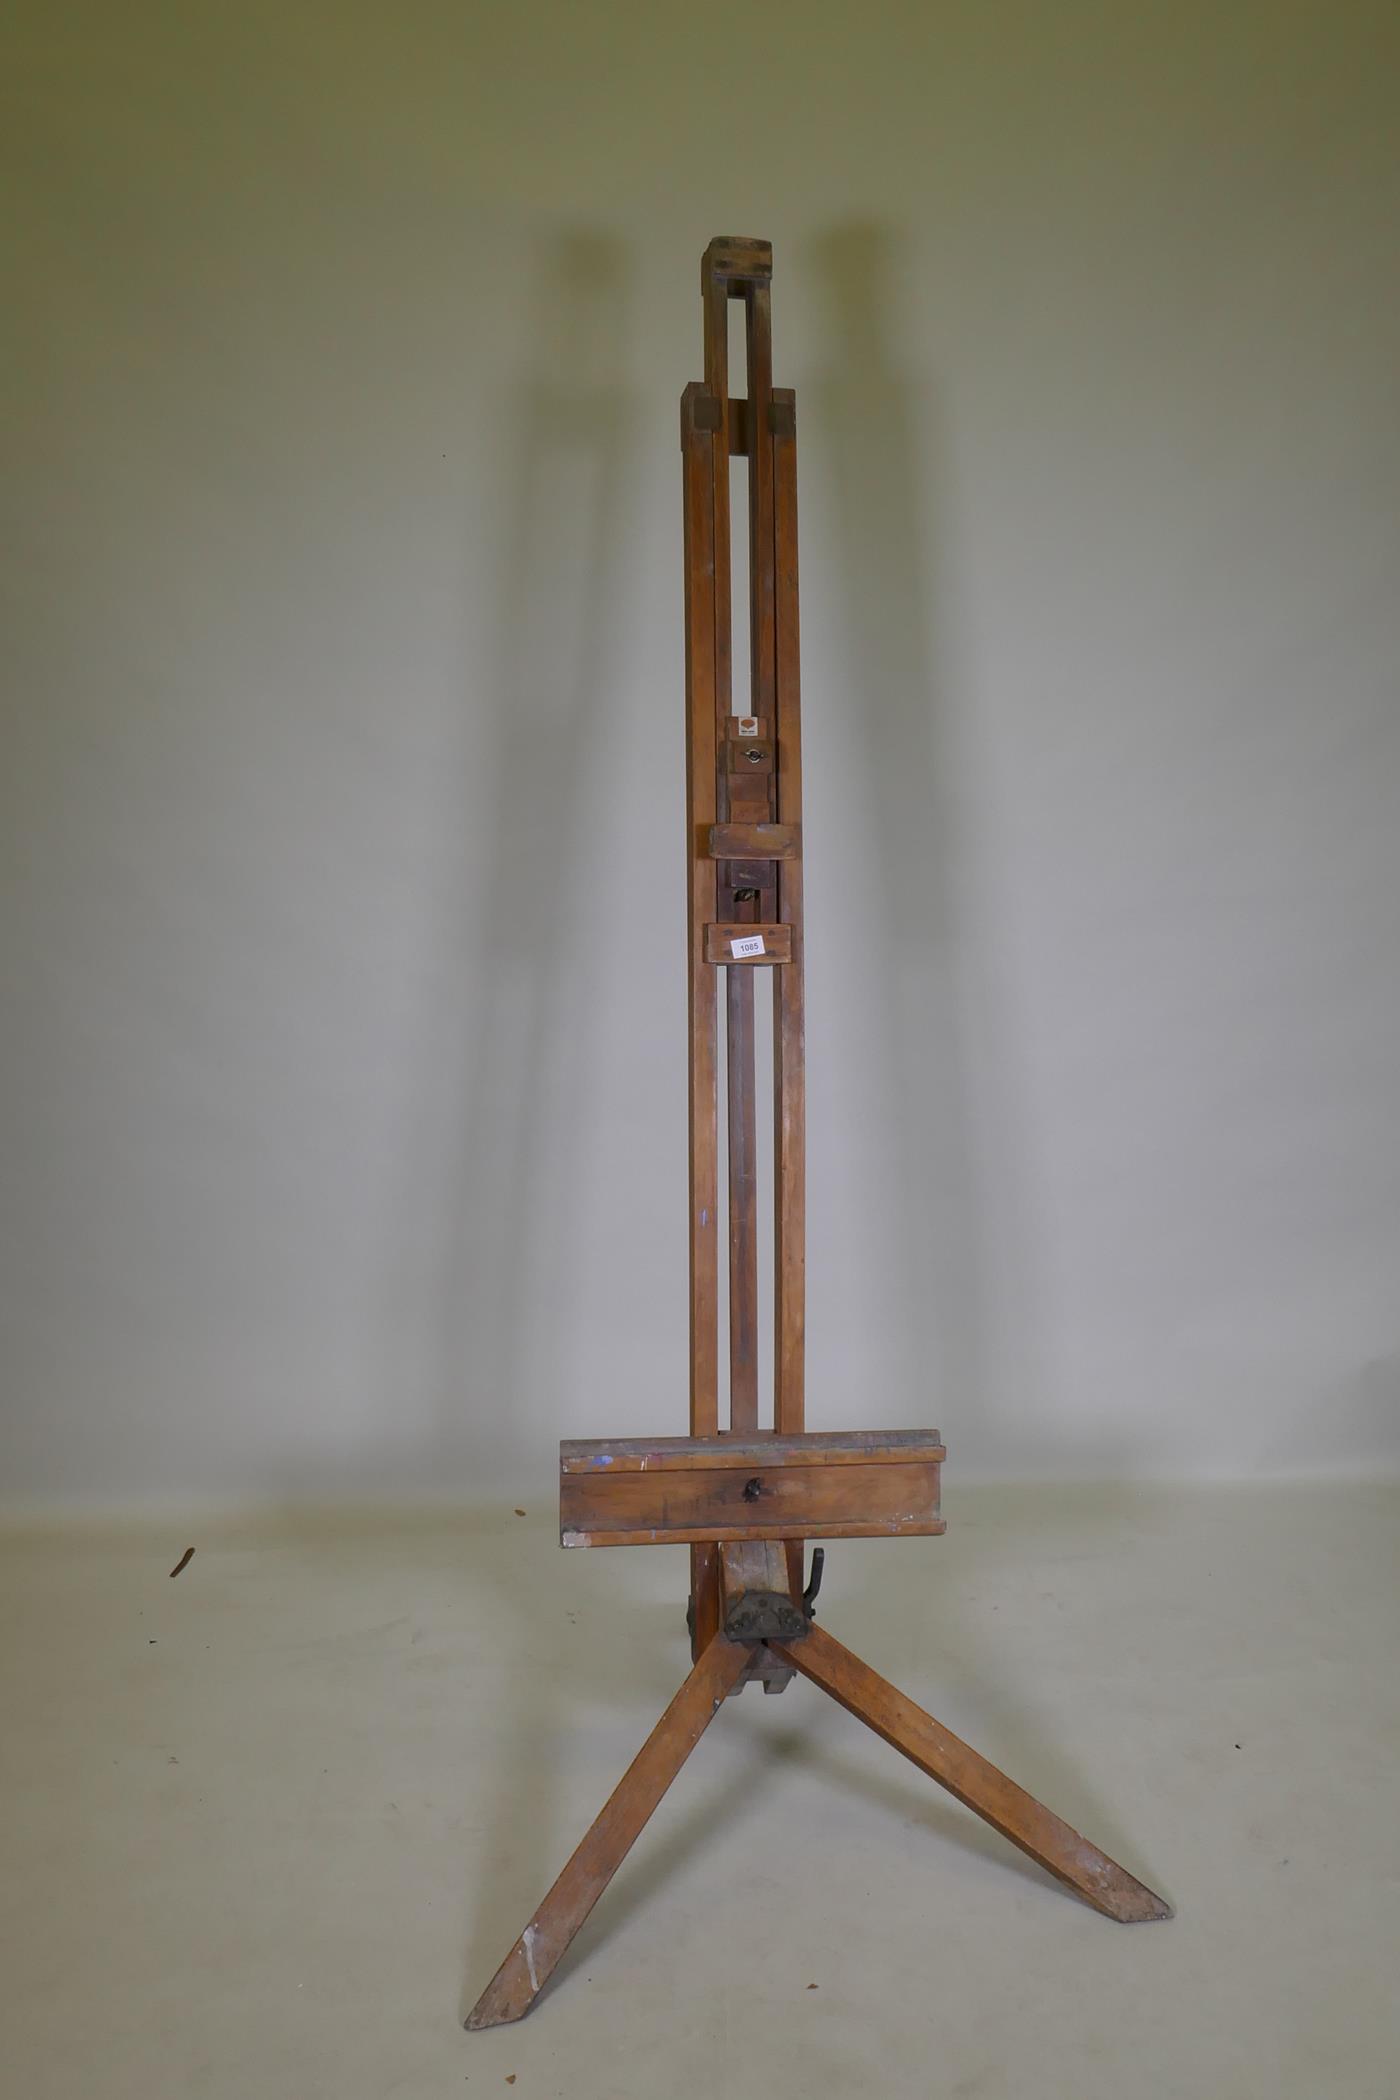 A Winsor and Newton artist's easel, 184cm high